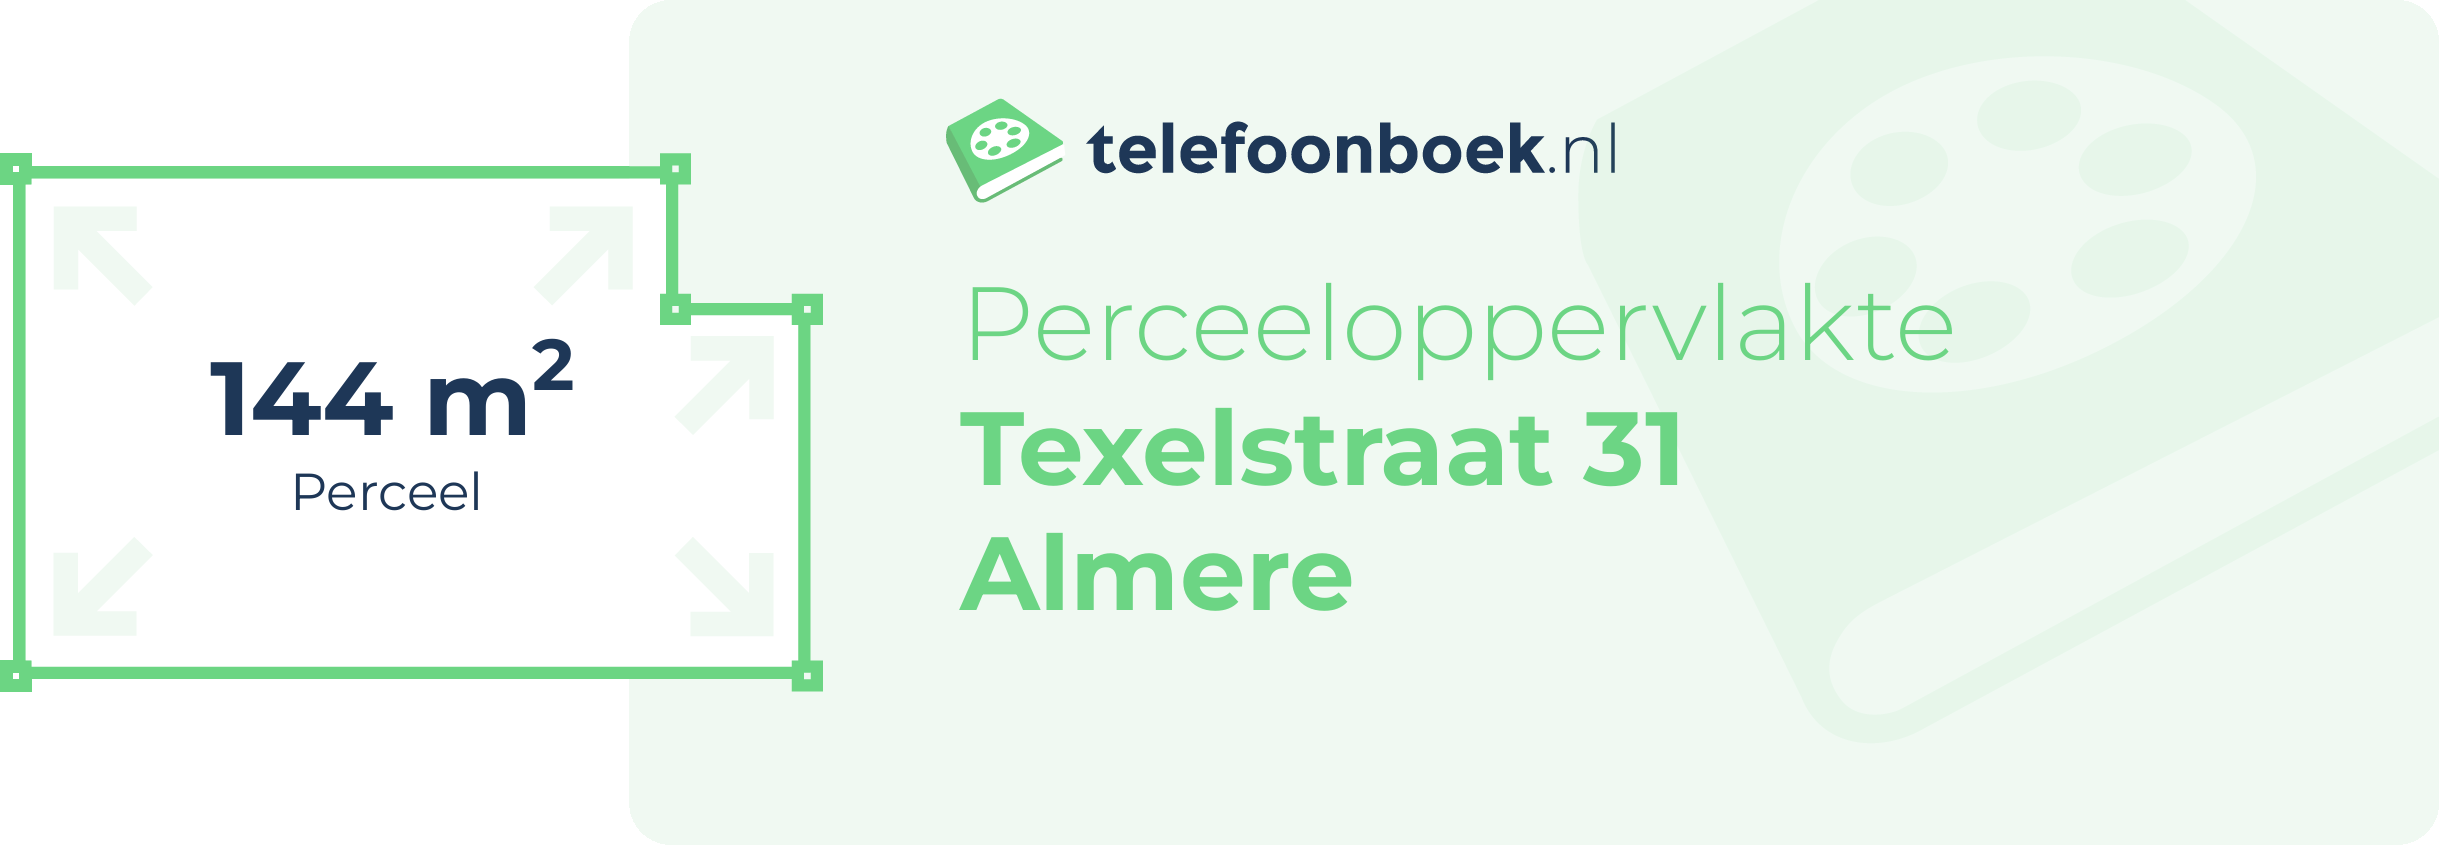 Perceeloppervlakte Texelstraat 31 Almere